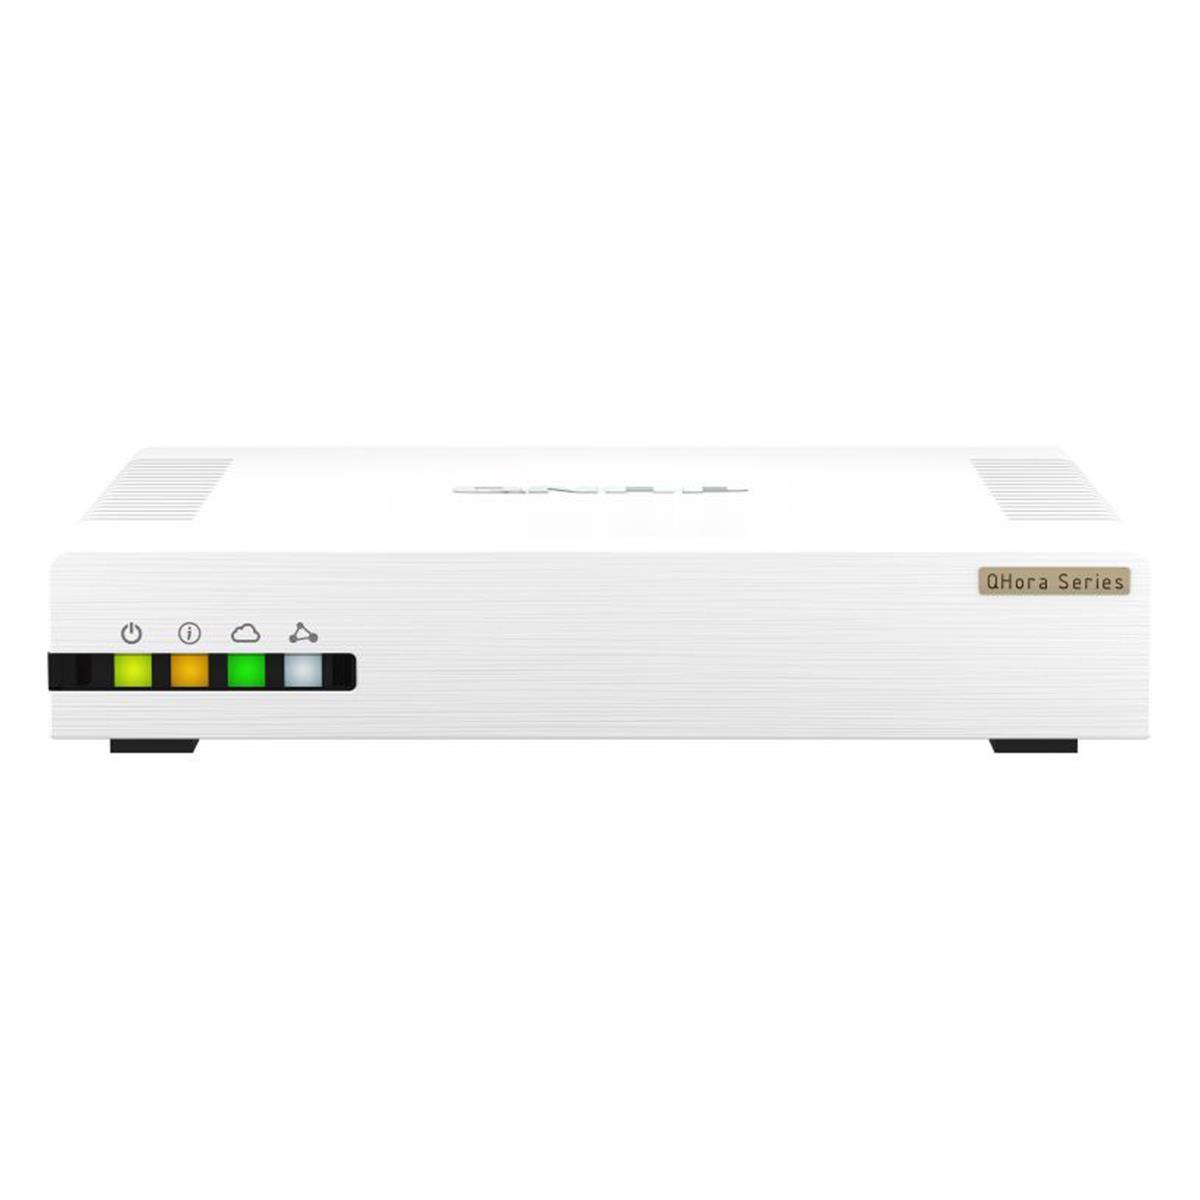 Image of QNAP Qnap QHora-321 Next-Generation Six-Port 2.5GbE SD-WAN Router